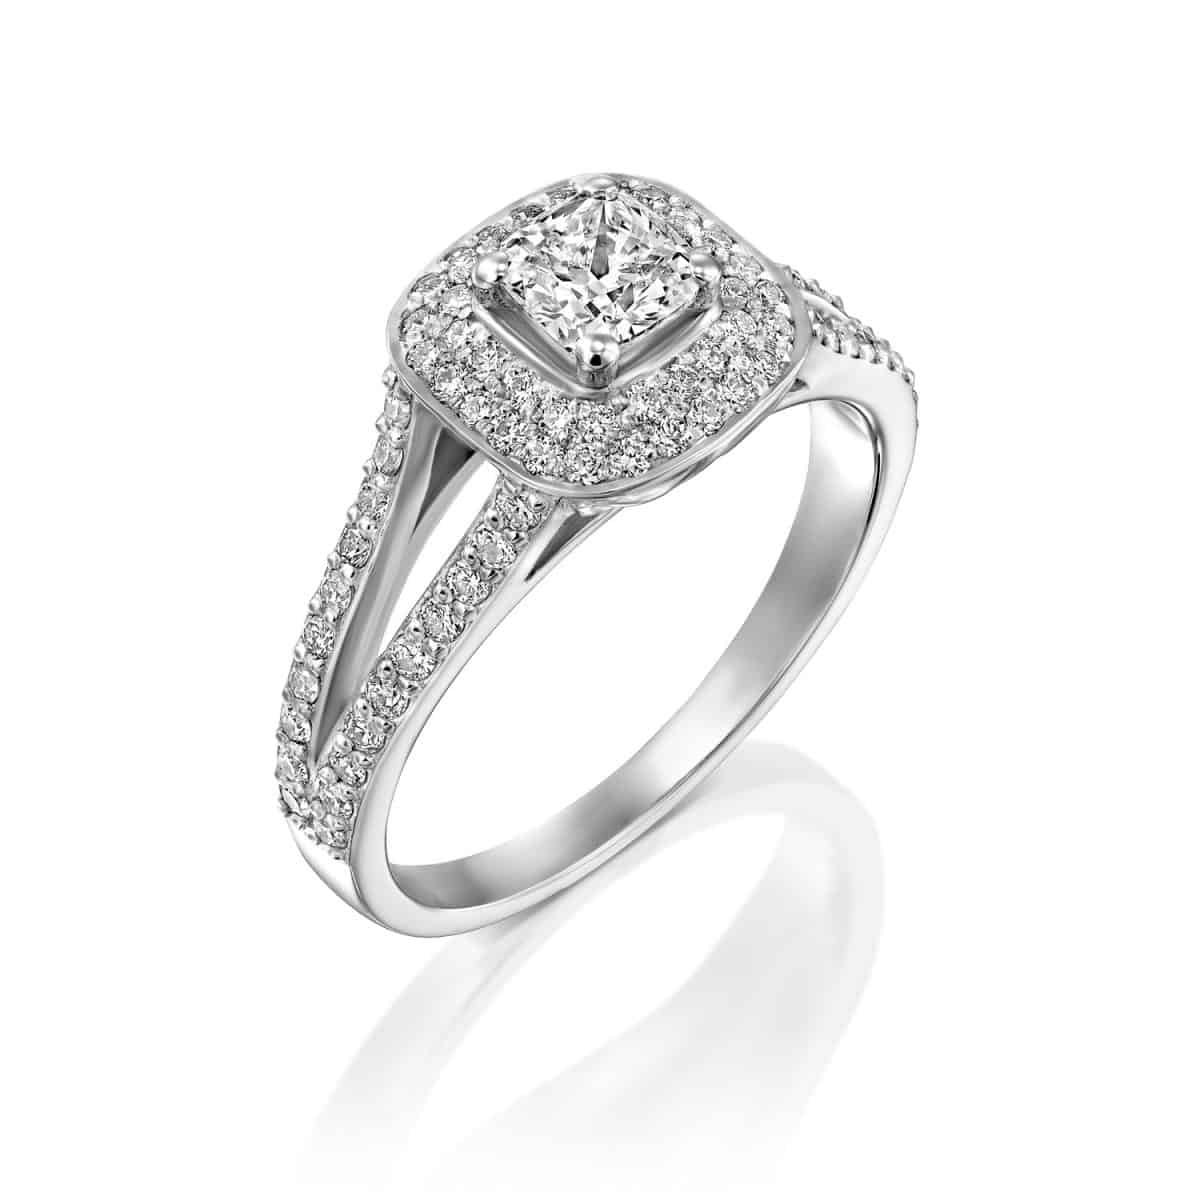 1.41 carat diamond engagement ring "Alexis"